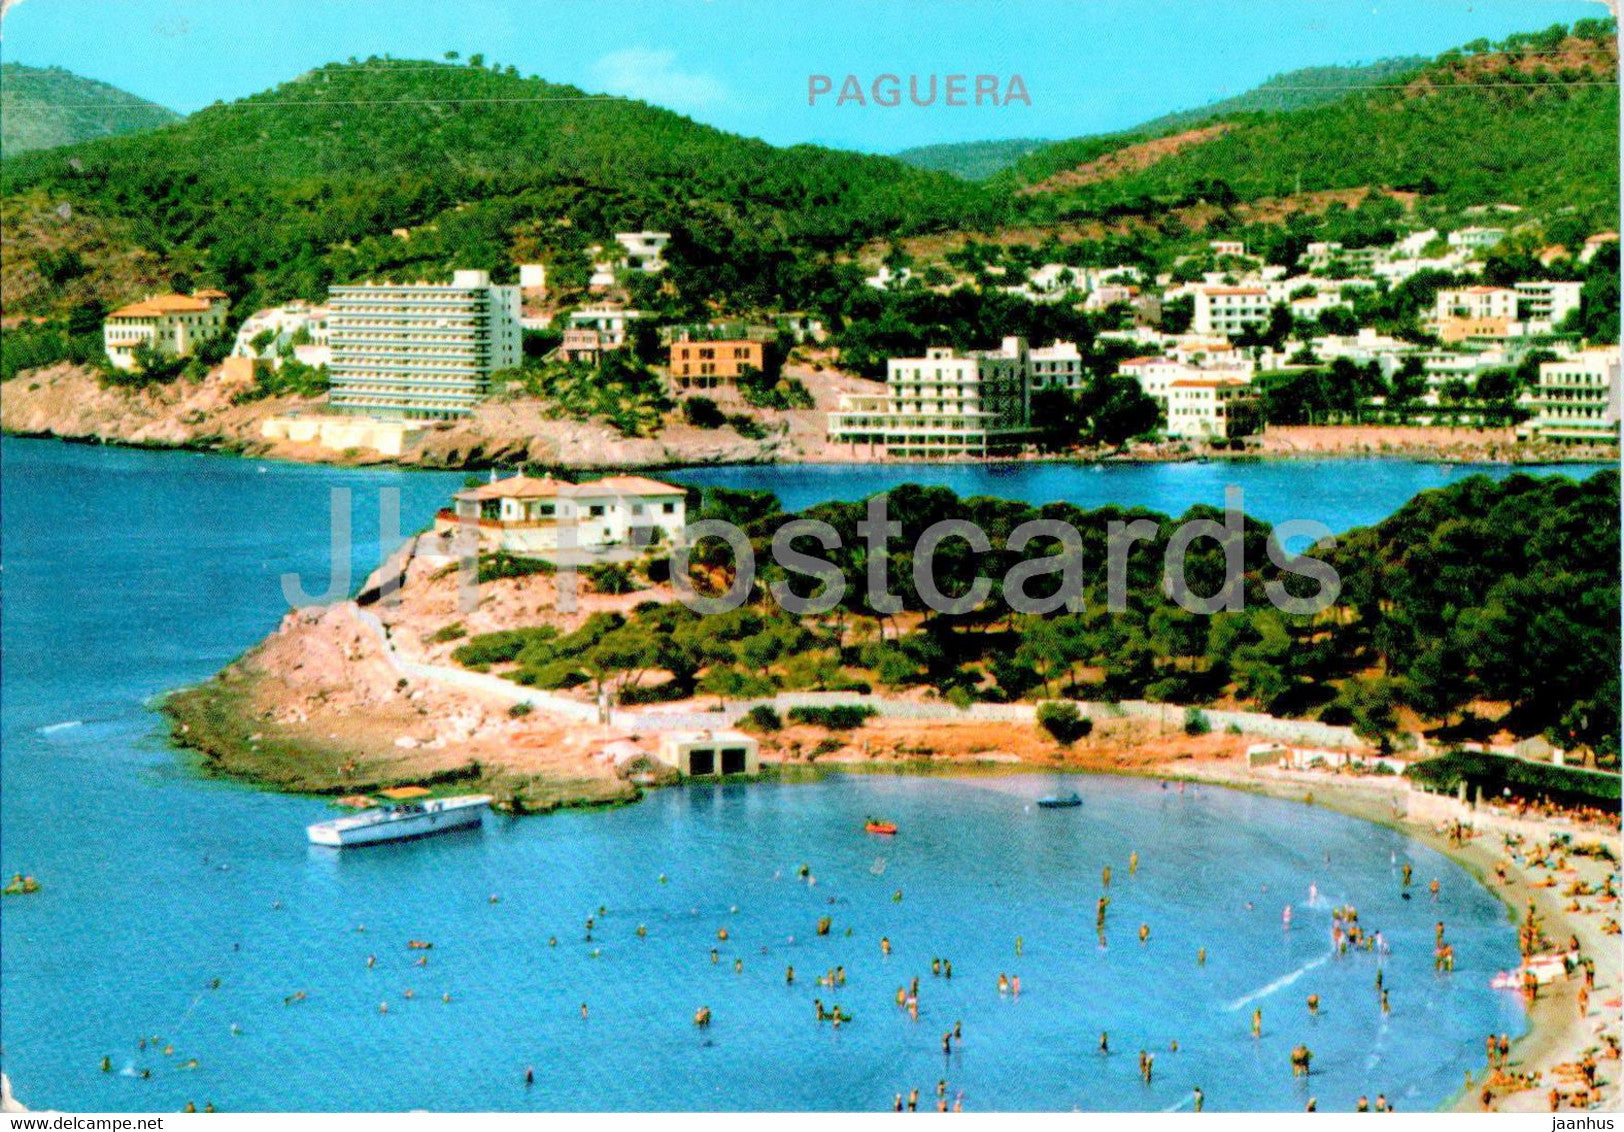 Paguera - Mallorca - 4076 - Spain - unused - JH Postcards